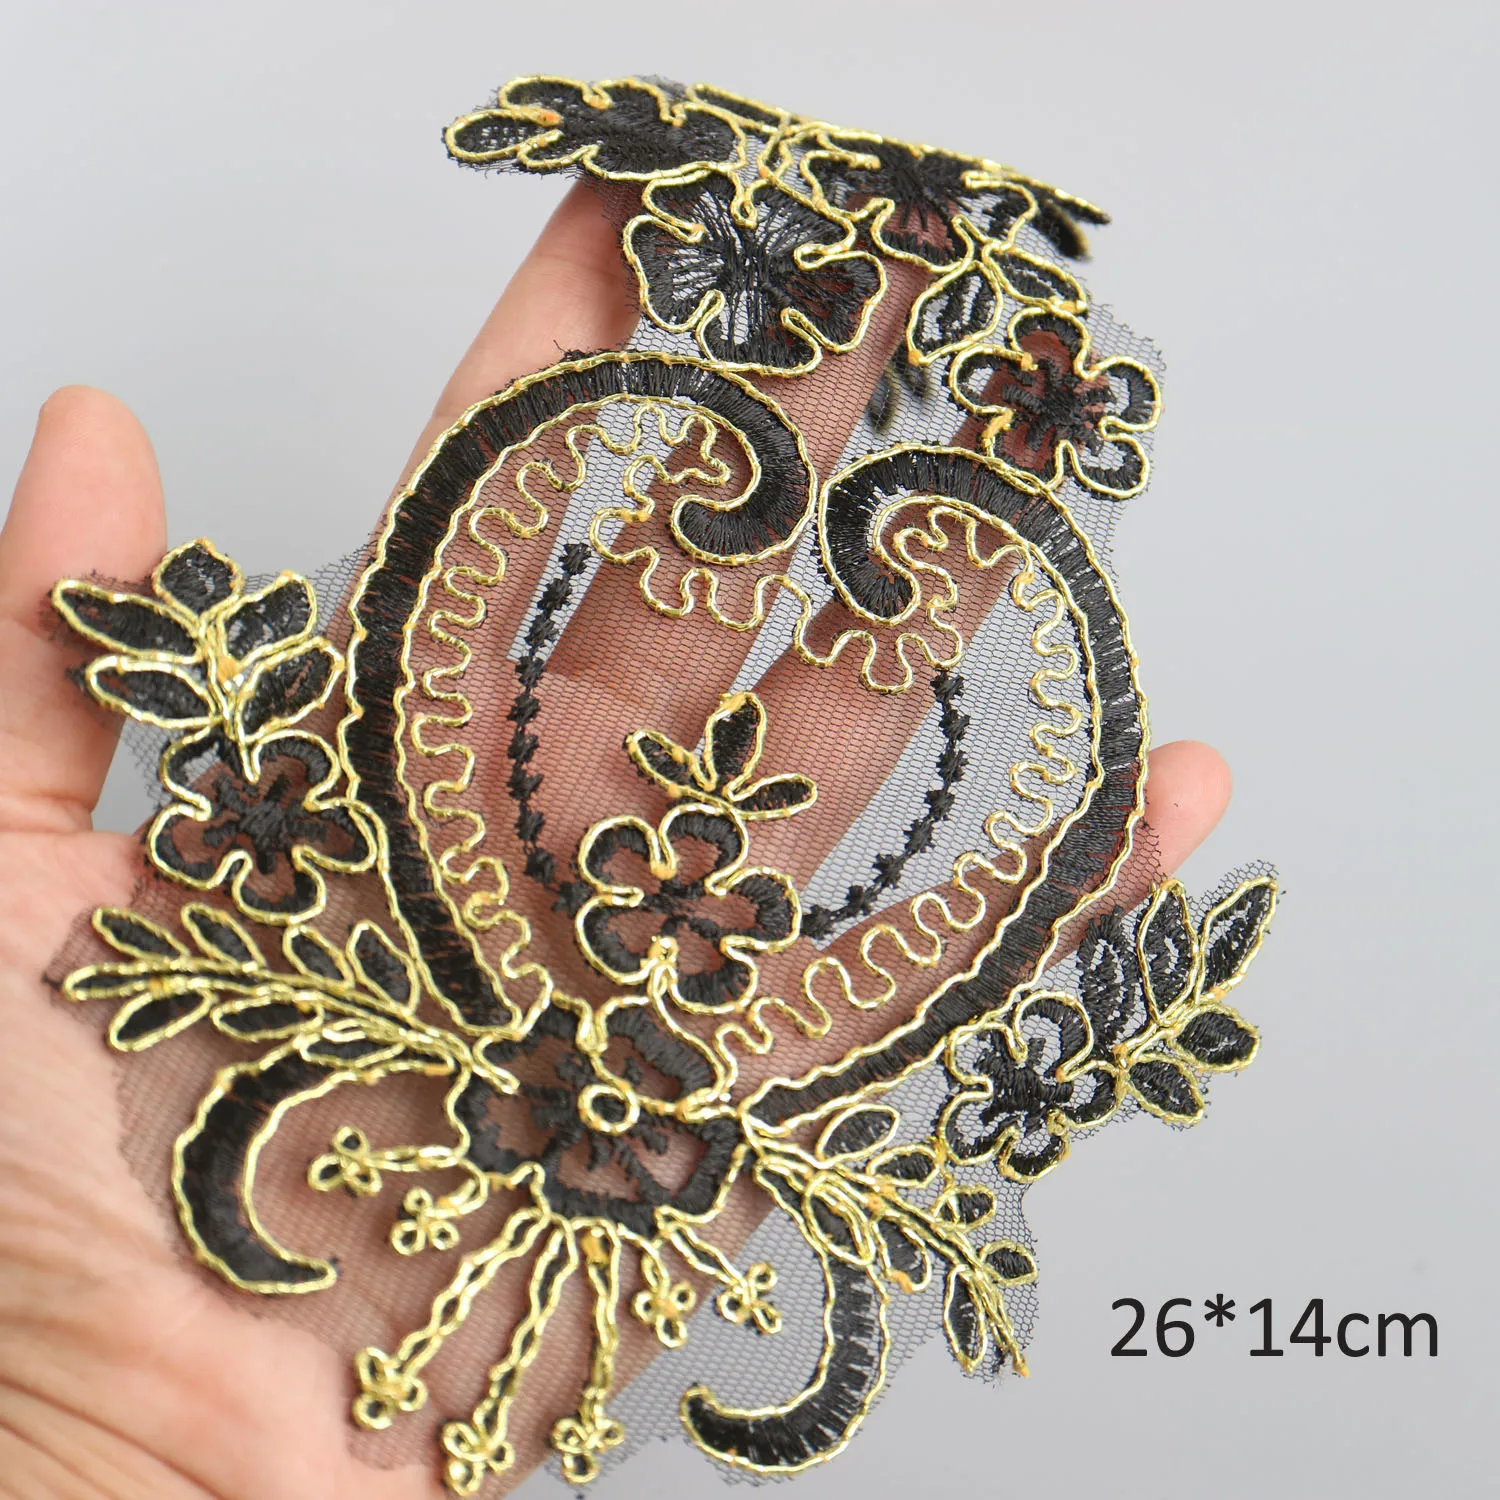 

2pc/lot 26*14cm embroidery lace applique for clothes Flower lace patches decoration parches for clothing